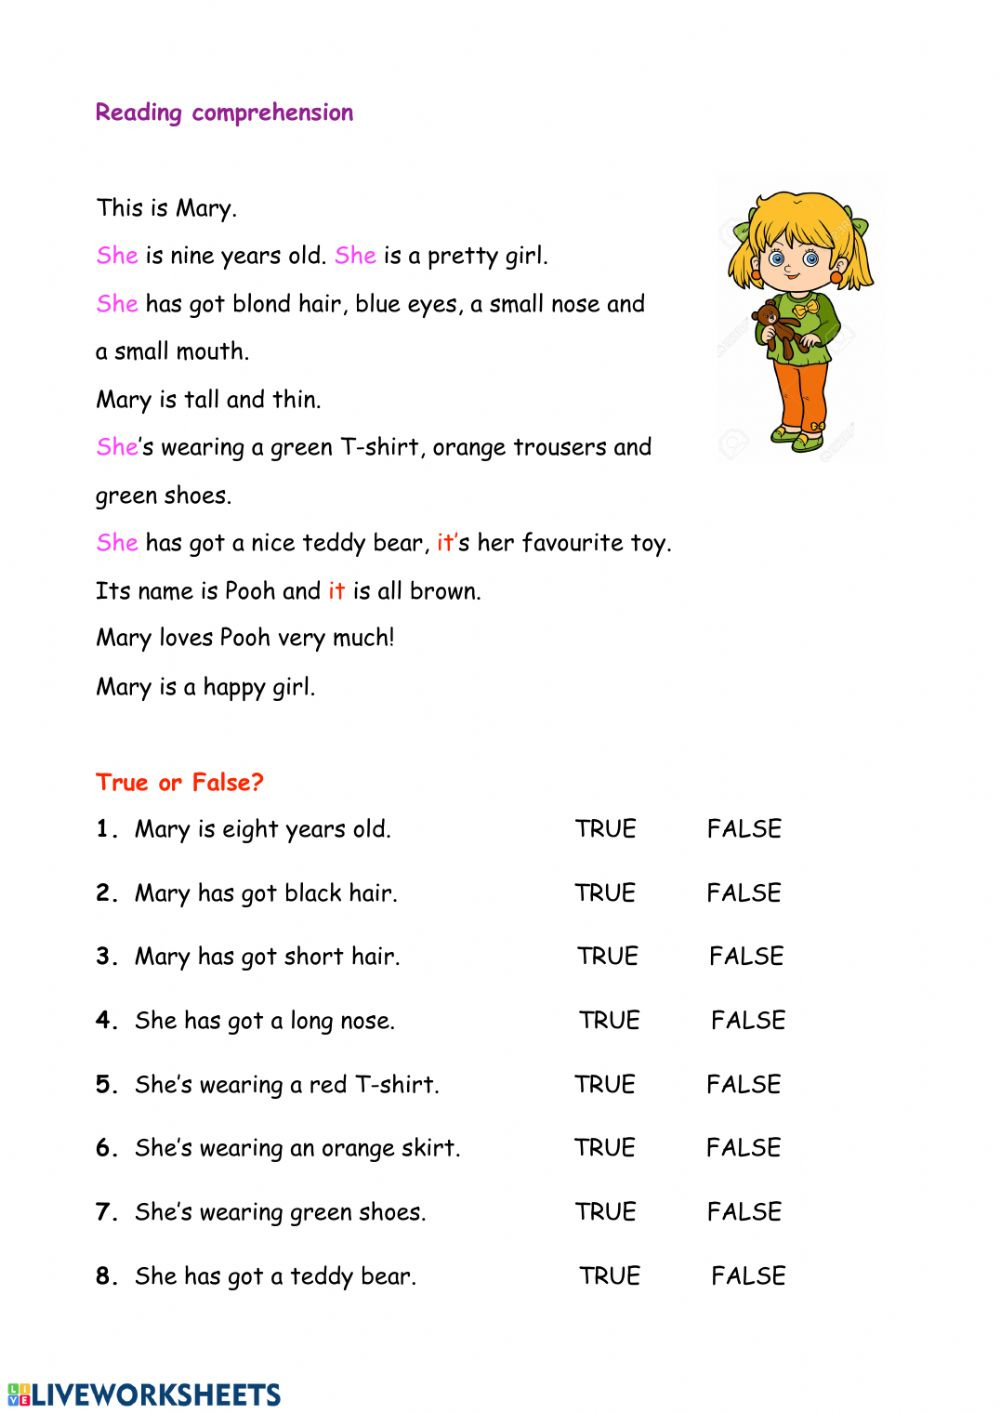 Reading Comprehension Activity For 4 Primary School